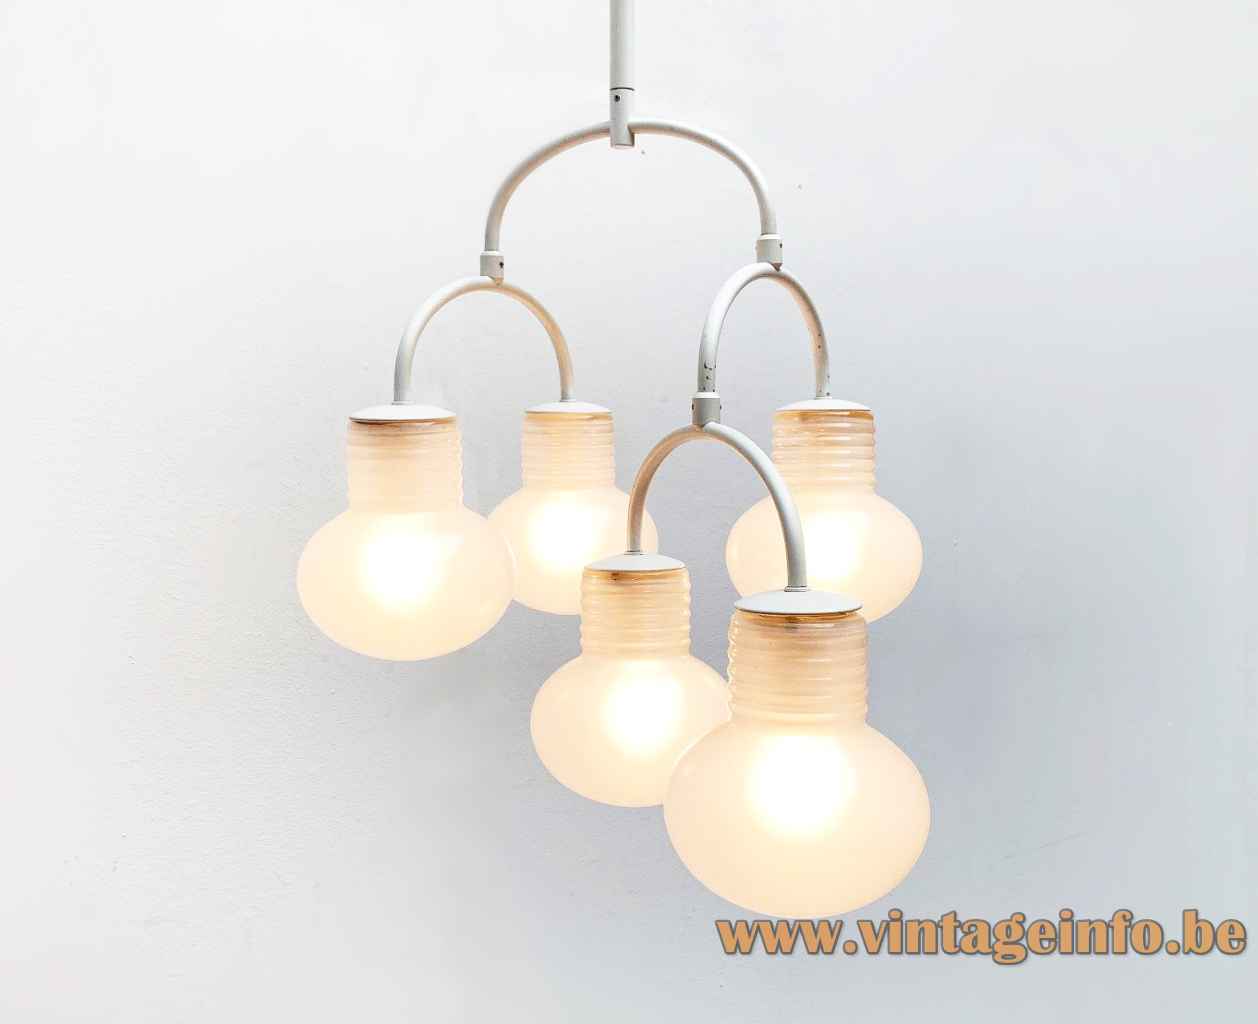 1960s Temde bulbs chandelier adjustable glass lampshades white metal rods Germany Switzerland design: Eva Renée Nele